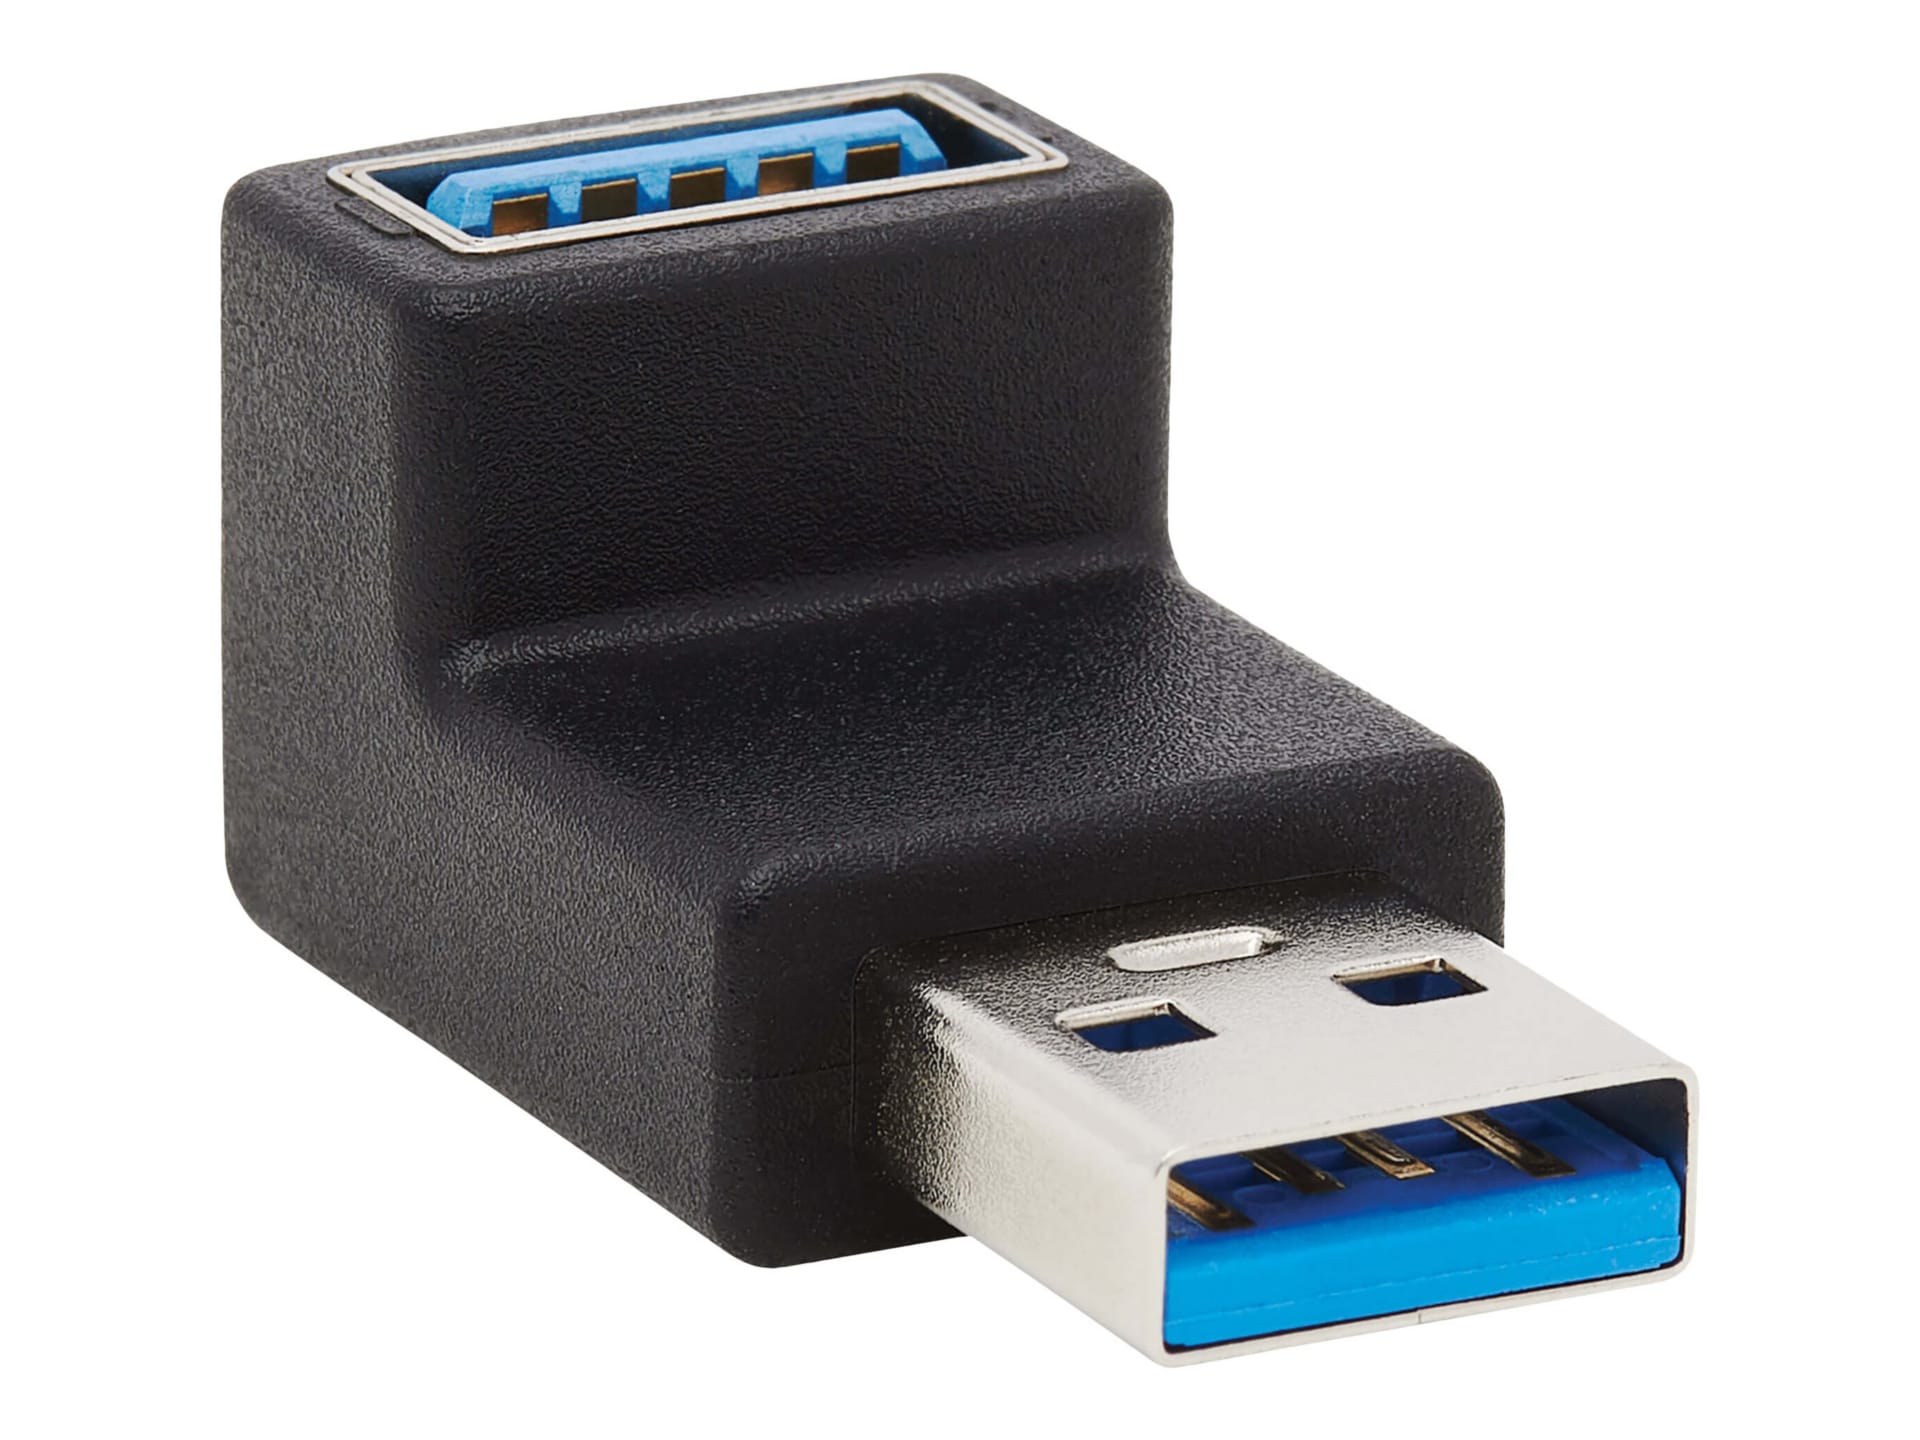 Tripp Lite USB 3.0 SuperSpeed Adapter - USB-A to USB-A, M/F, Up Angle, Black - USB adapter